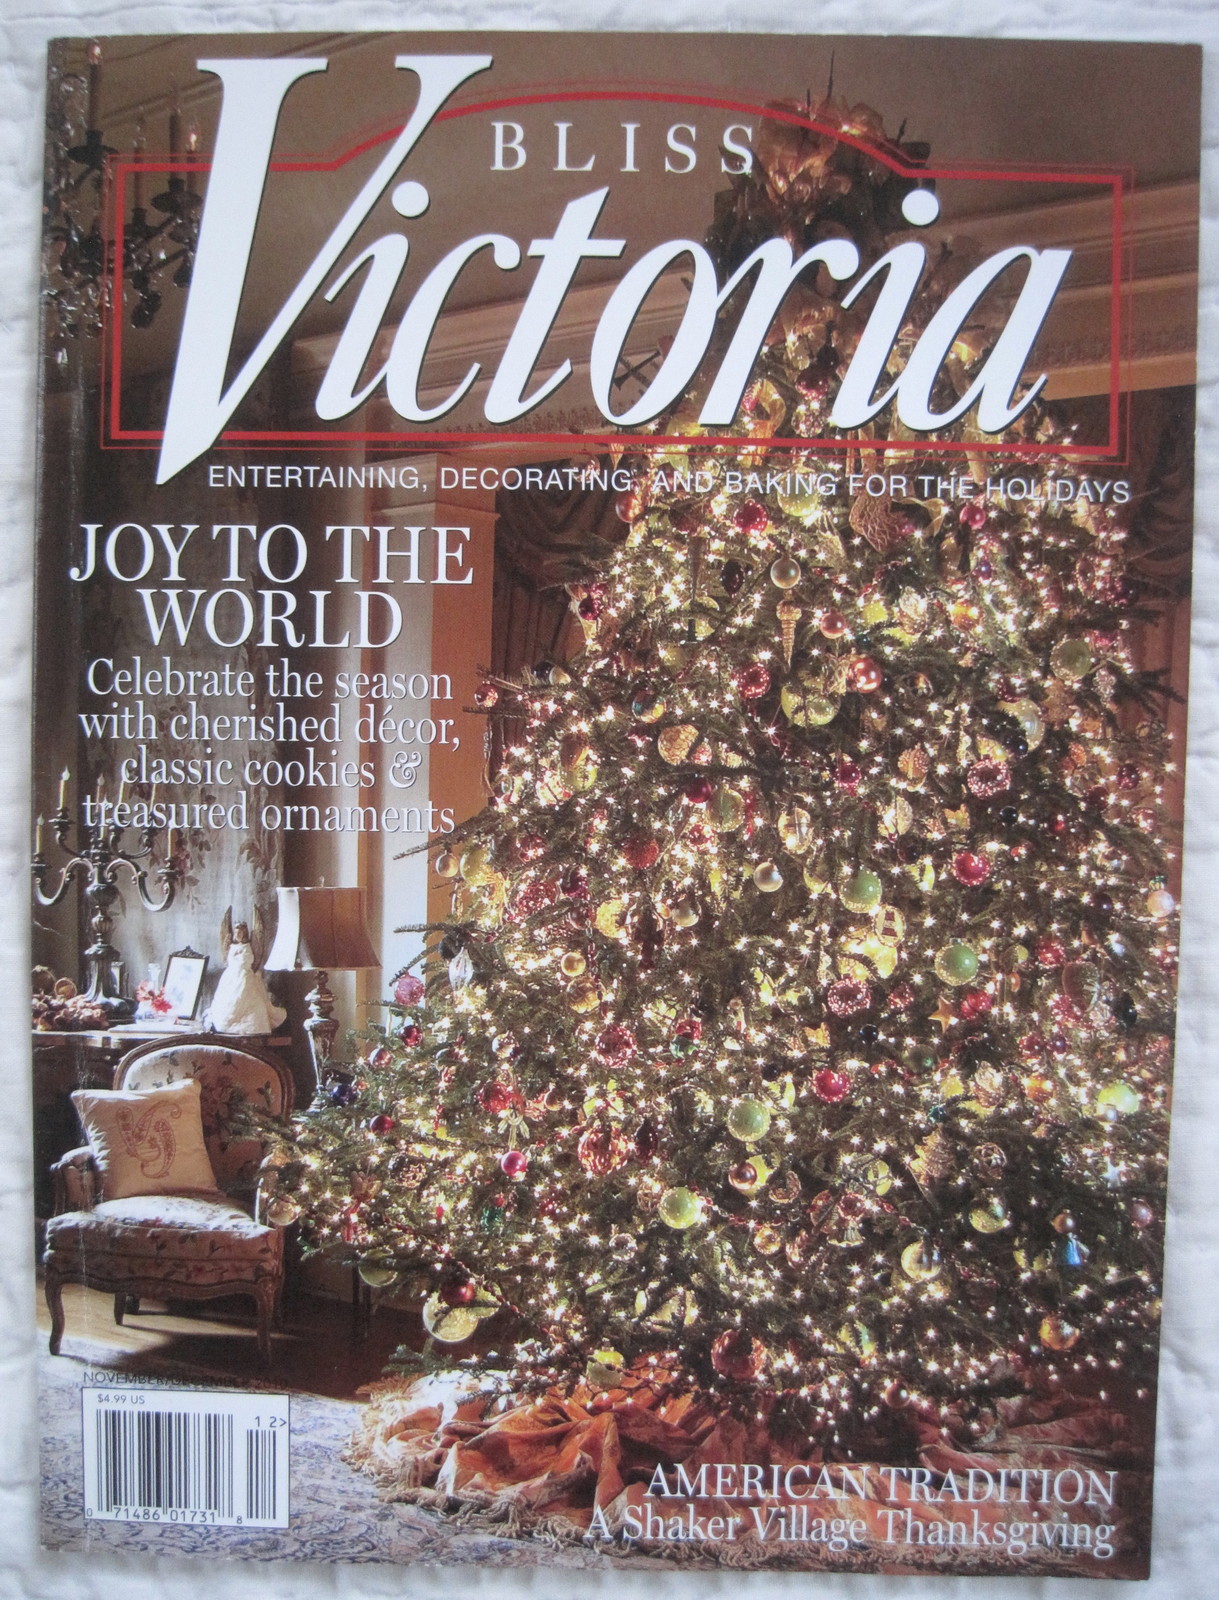 Victoria Magazine "Holiday Issue" November & December 2010 Magazine